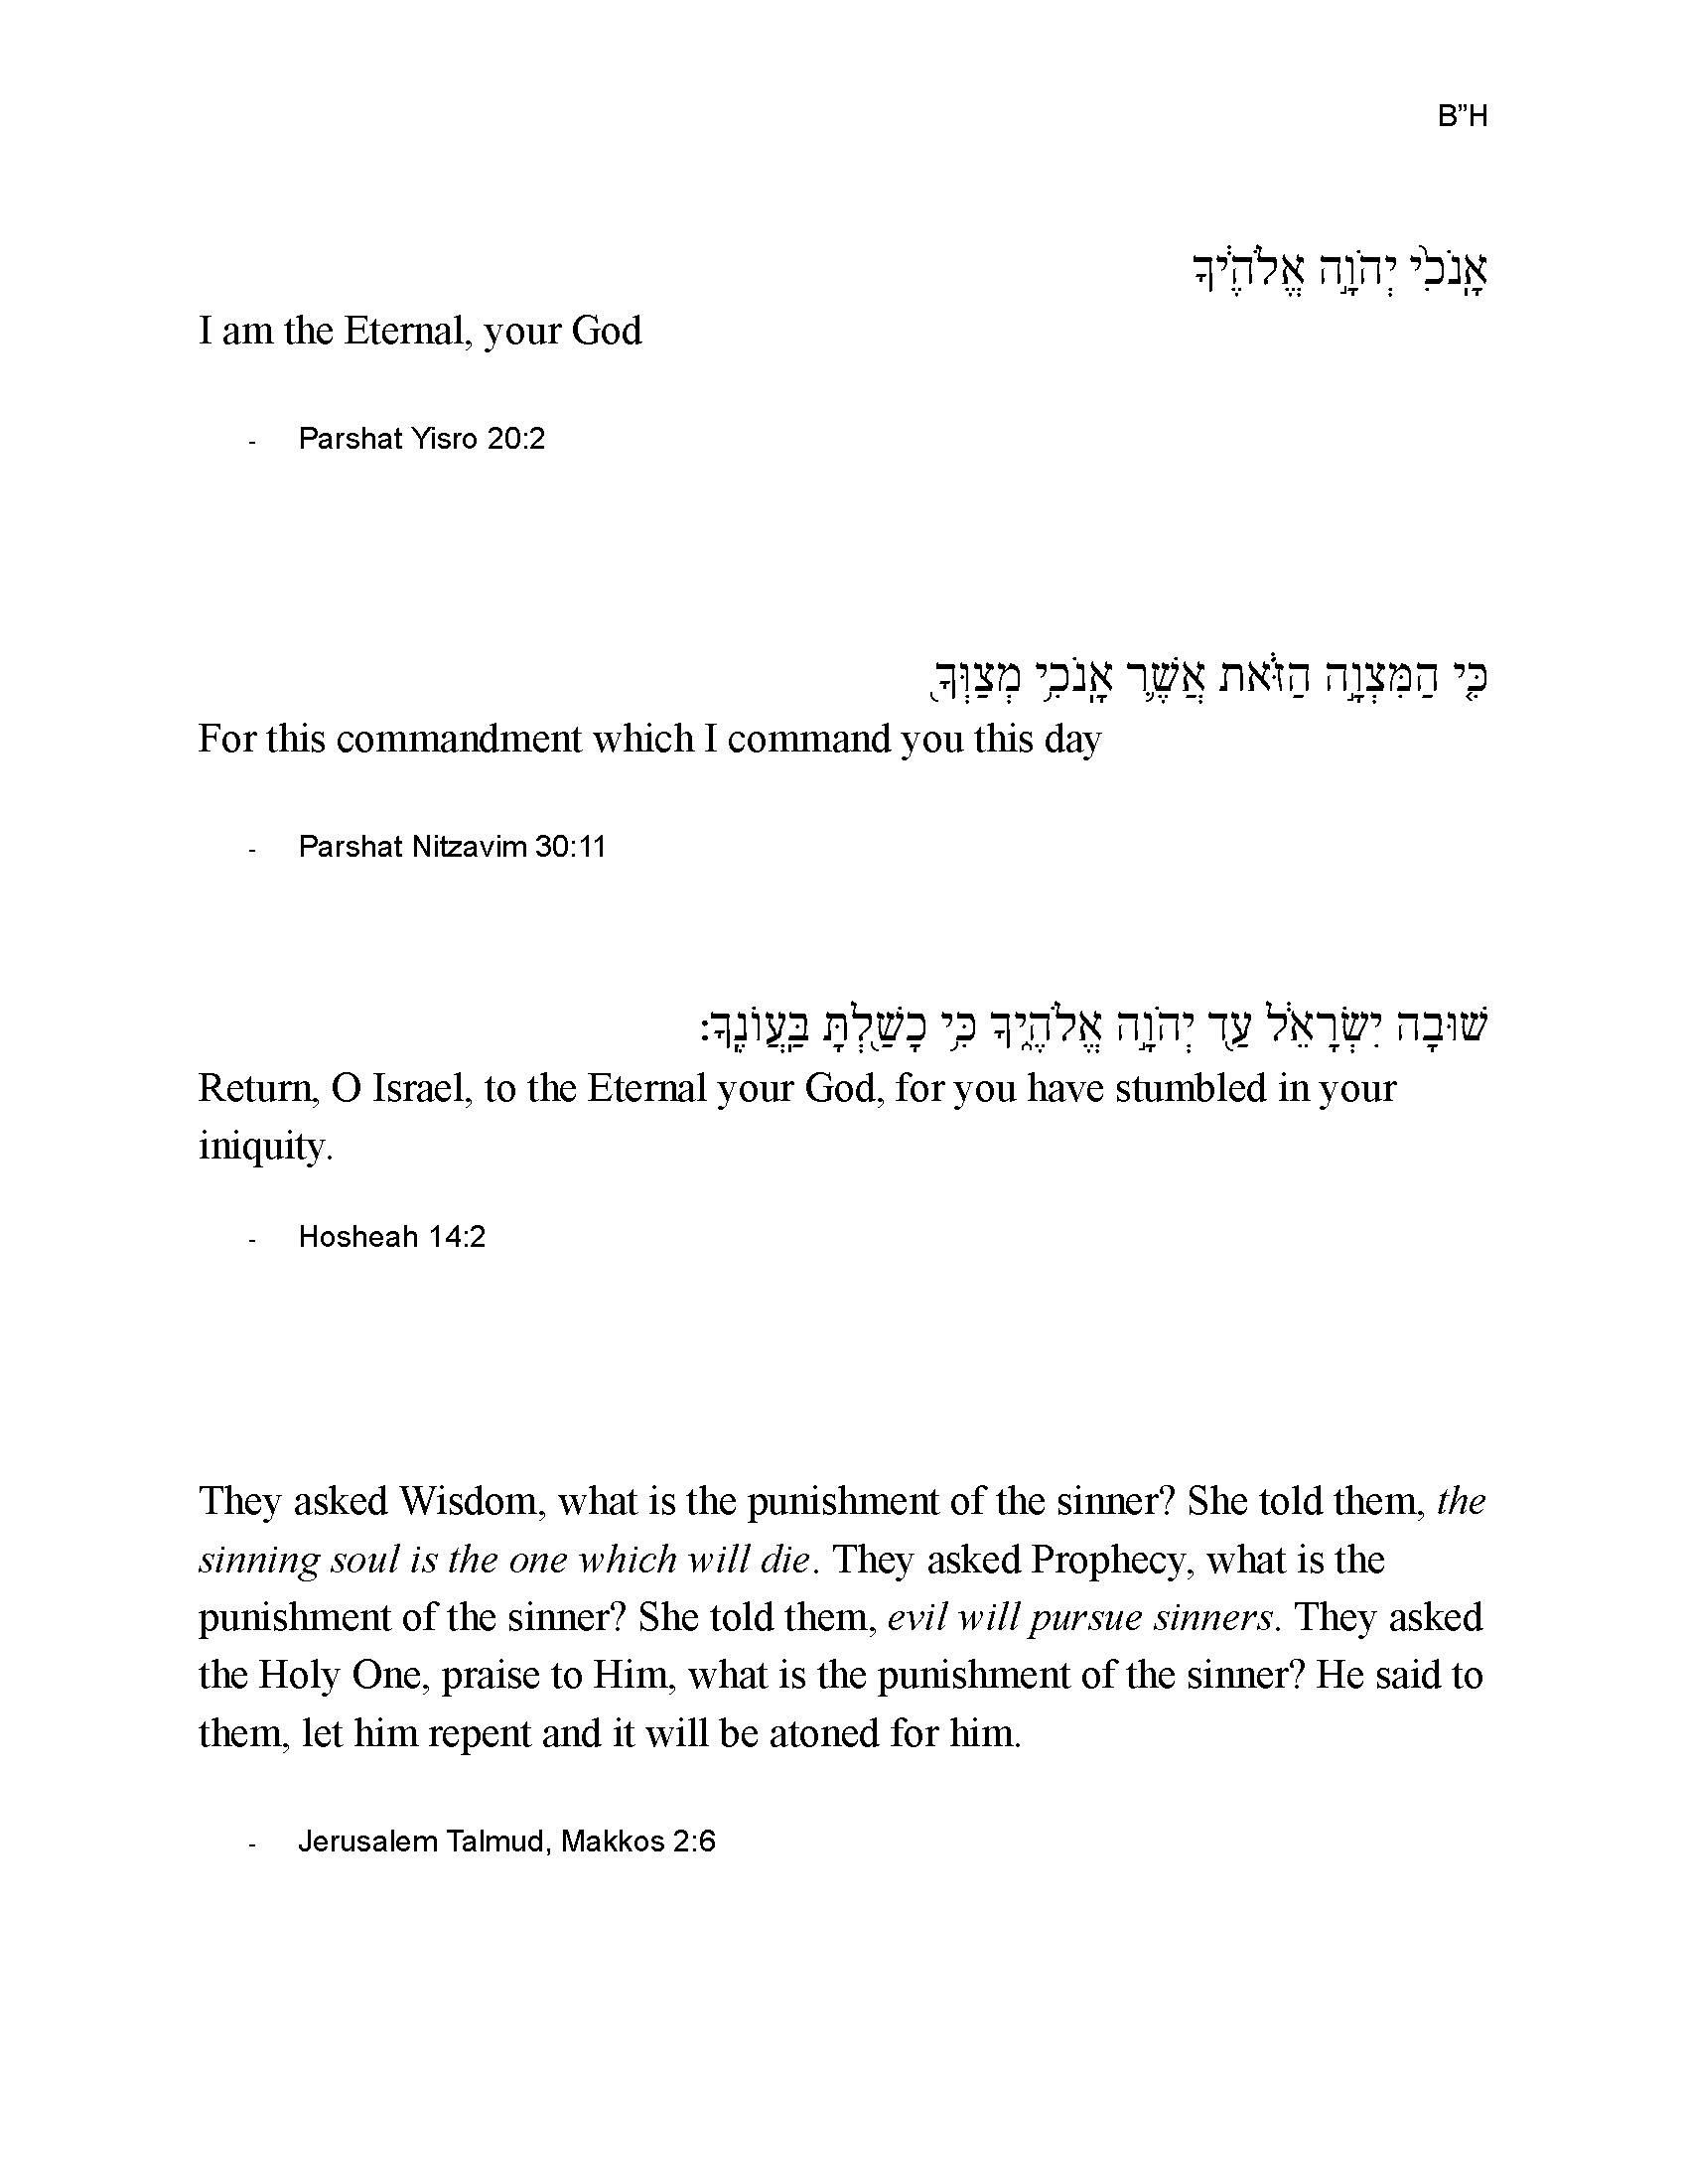 Deep Dive - Yom Kippur 5784_Page_5